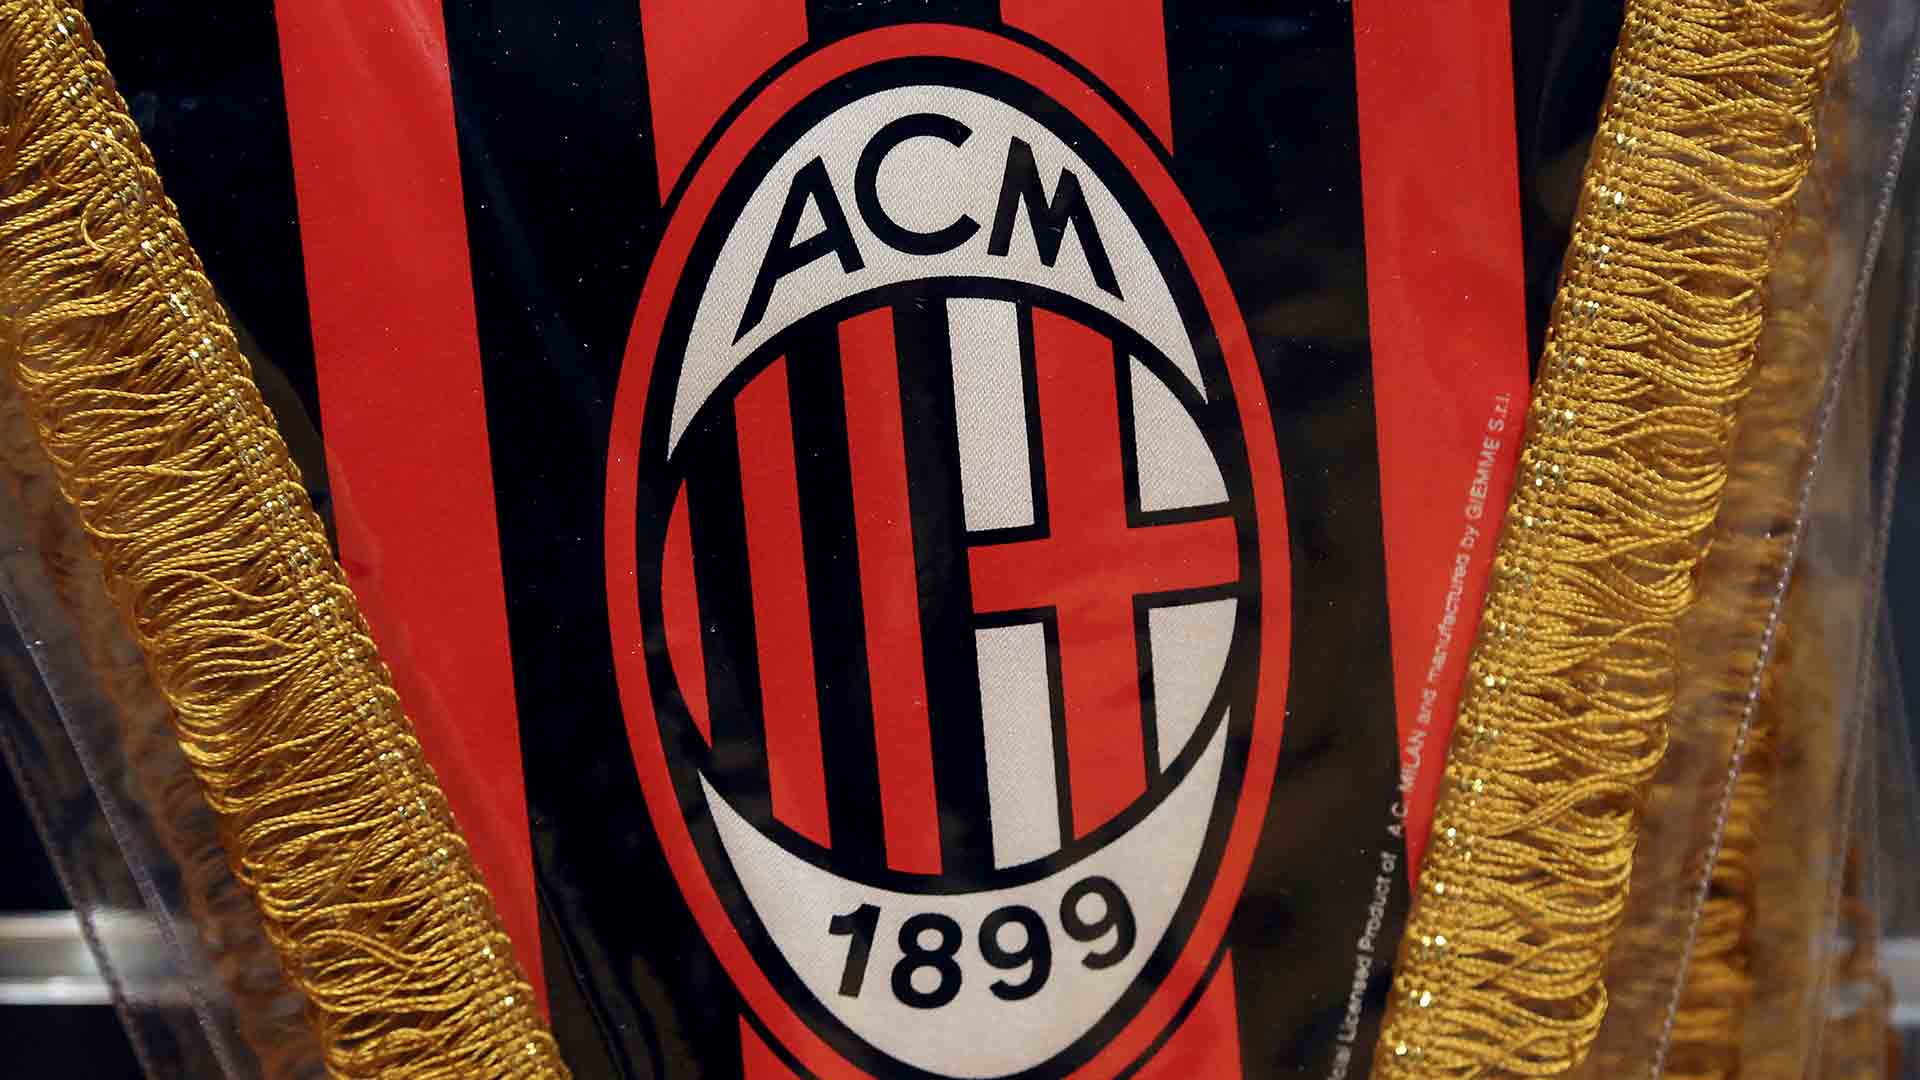 El AC Milan pasa a manos de un fondo de inversión estadounidense